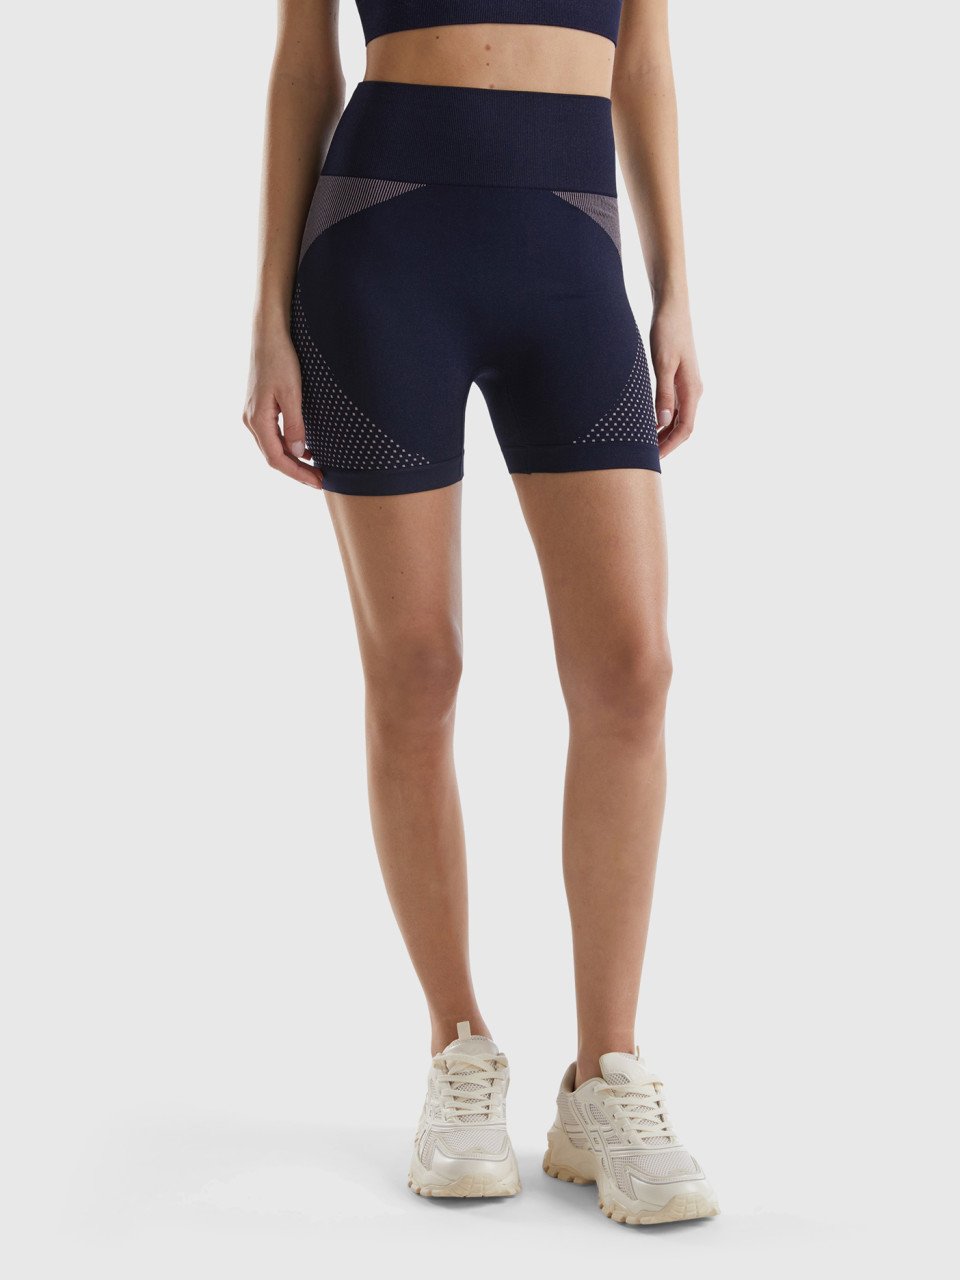 Benetton, Nahtlose Sport-shorts, Dunkelblau, female